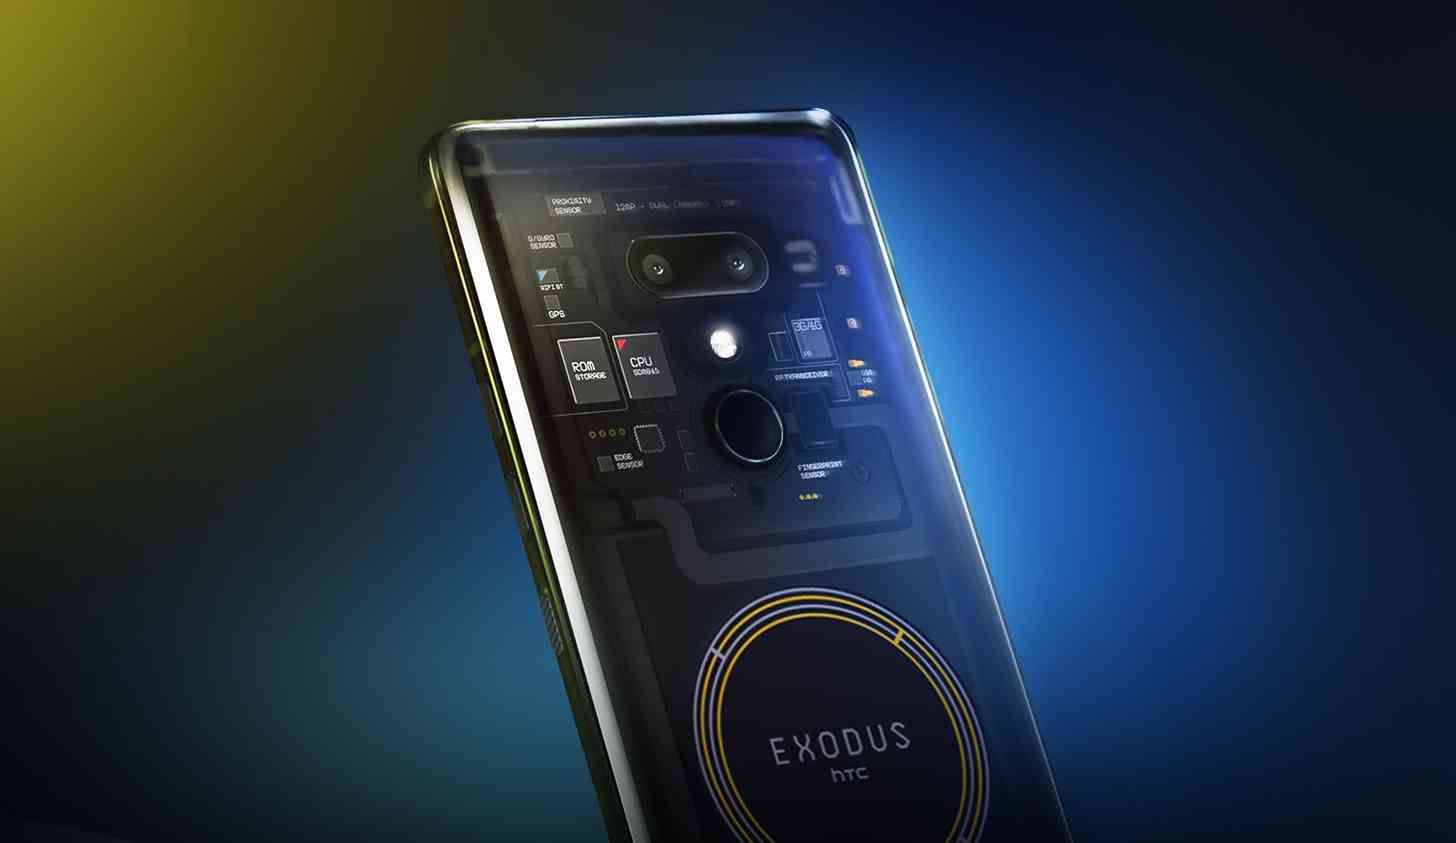 HTC Exodus 1 blockchain phone